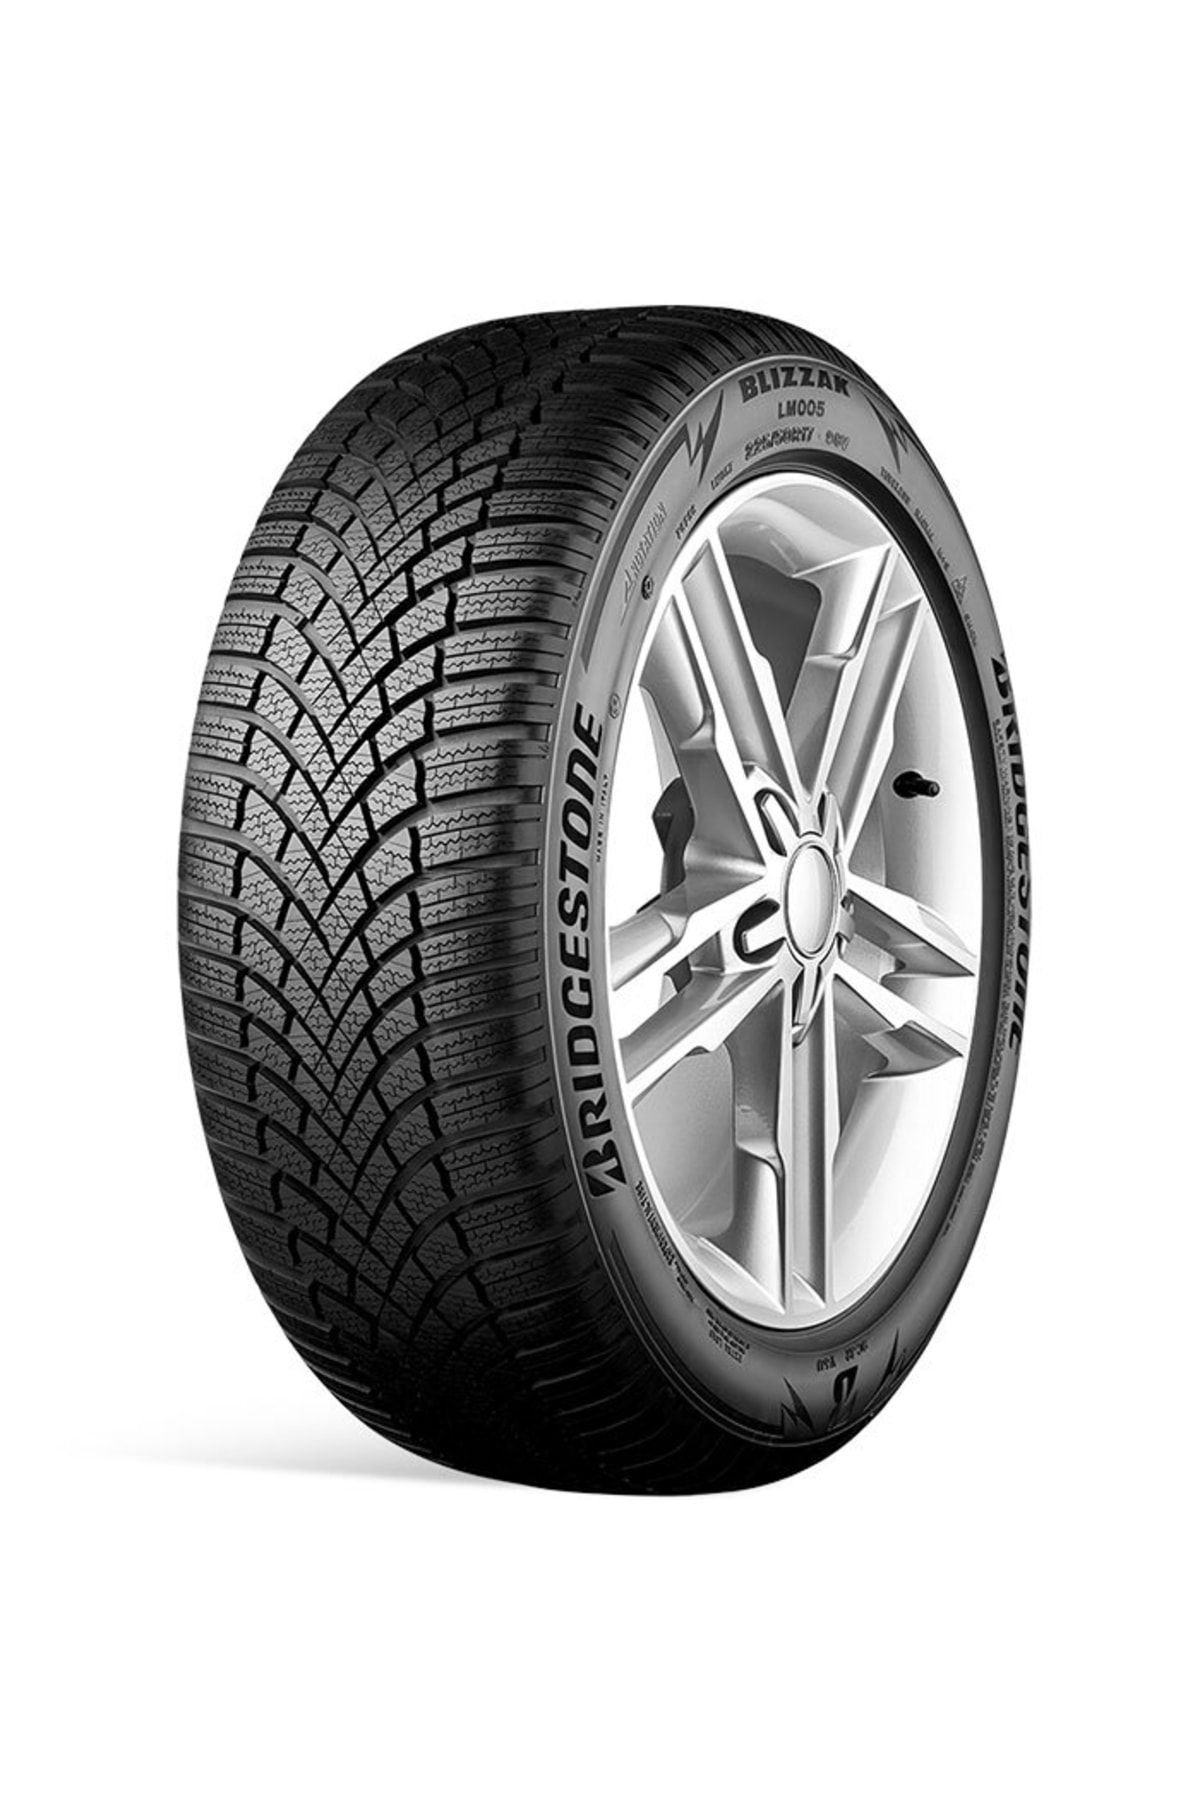 Bridgestone 225/45r18 95v Xl (rft) Driveguard Blizzak Lm005 Binek Kış Lastiği (2022 Üretim)